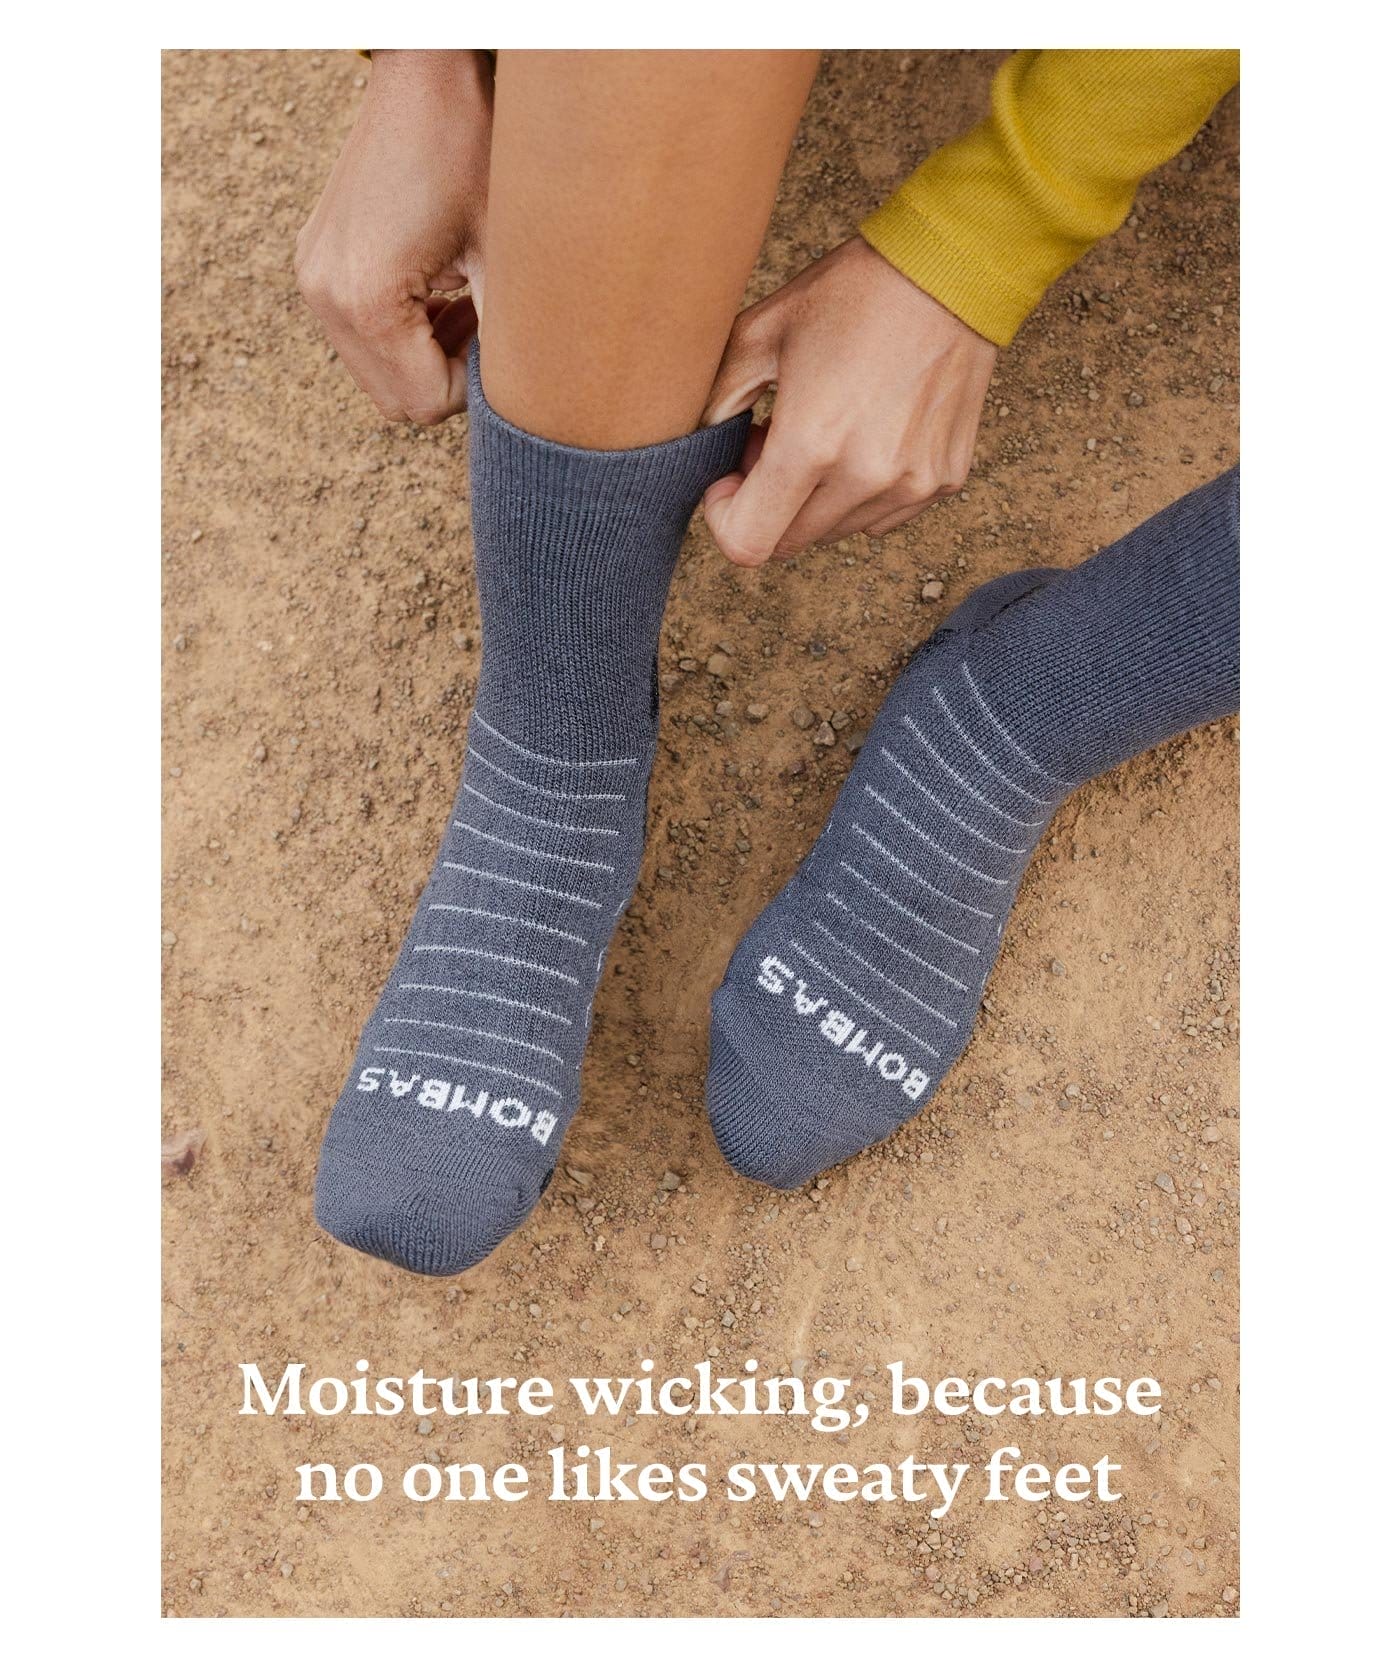 Moisture wicking, because no one likes sweaty feet